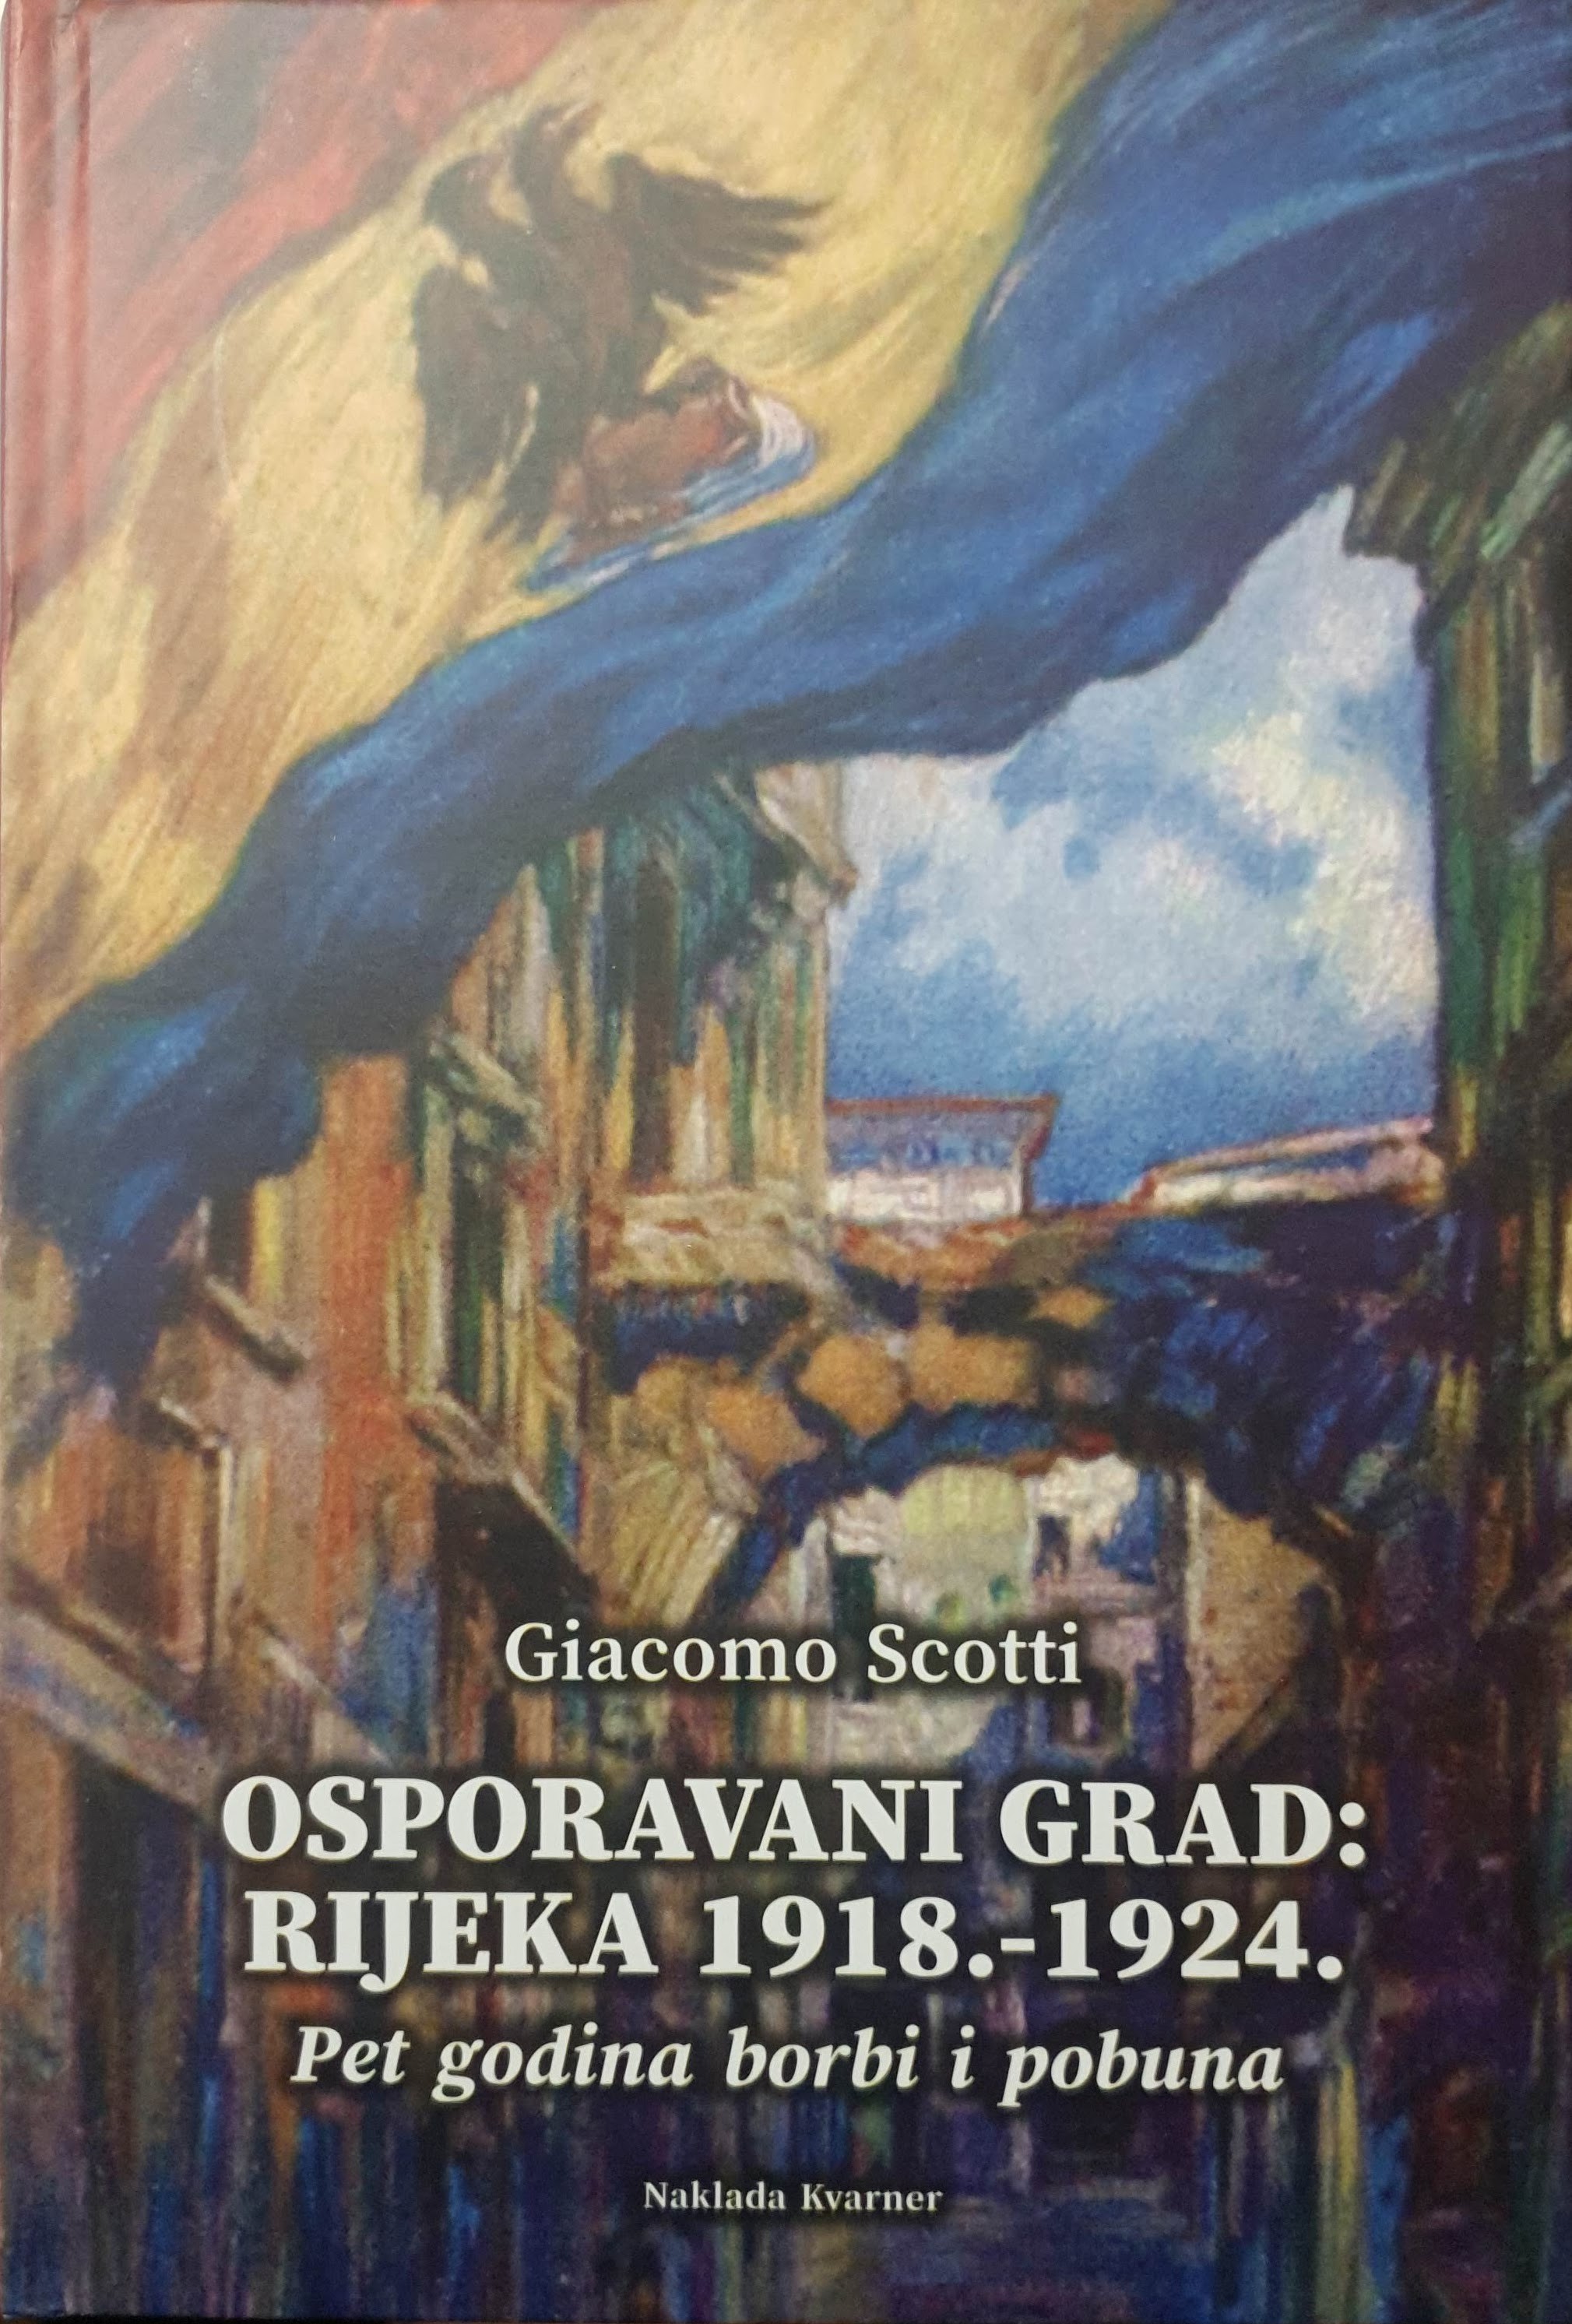 Giacomo Scotti: OSPORAVANI GRAD: Rijeka 1918.-1924.